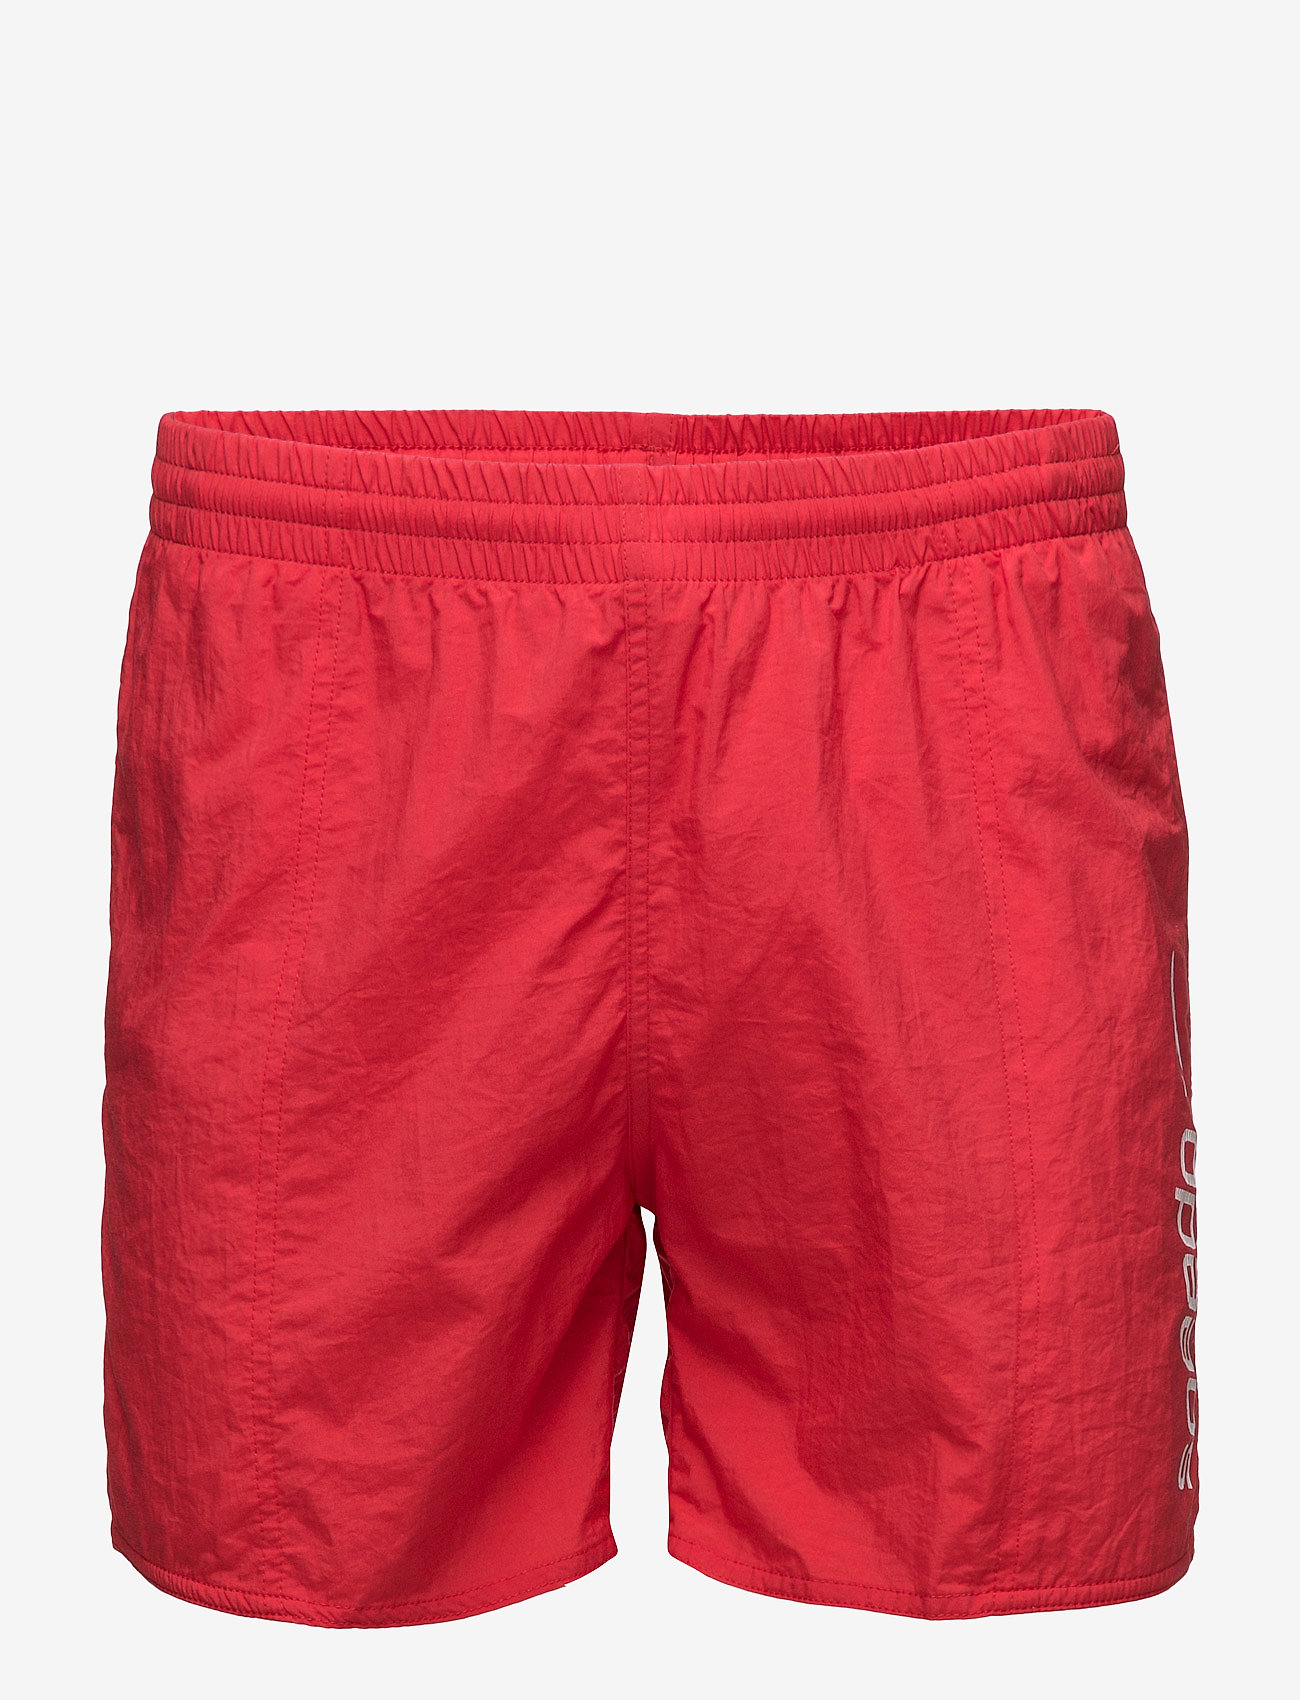 Speedo - SPEEDO SCOPE 16 WSHT AM - swim shorts - fed red - 0